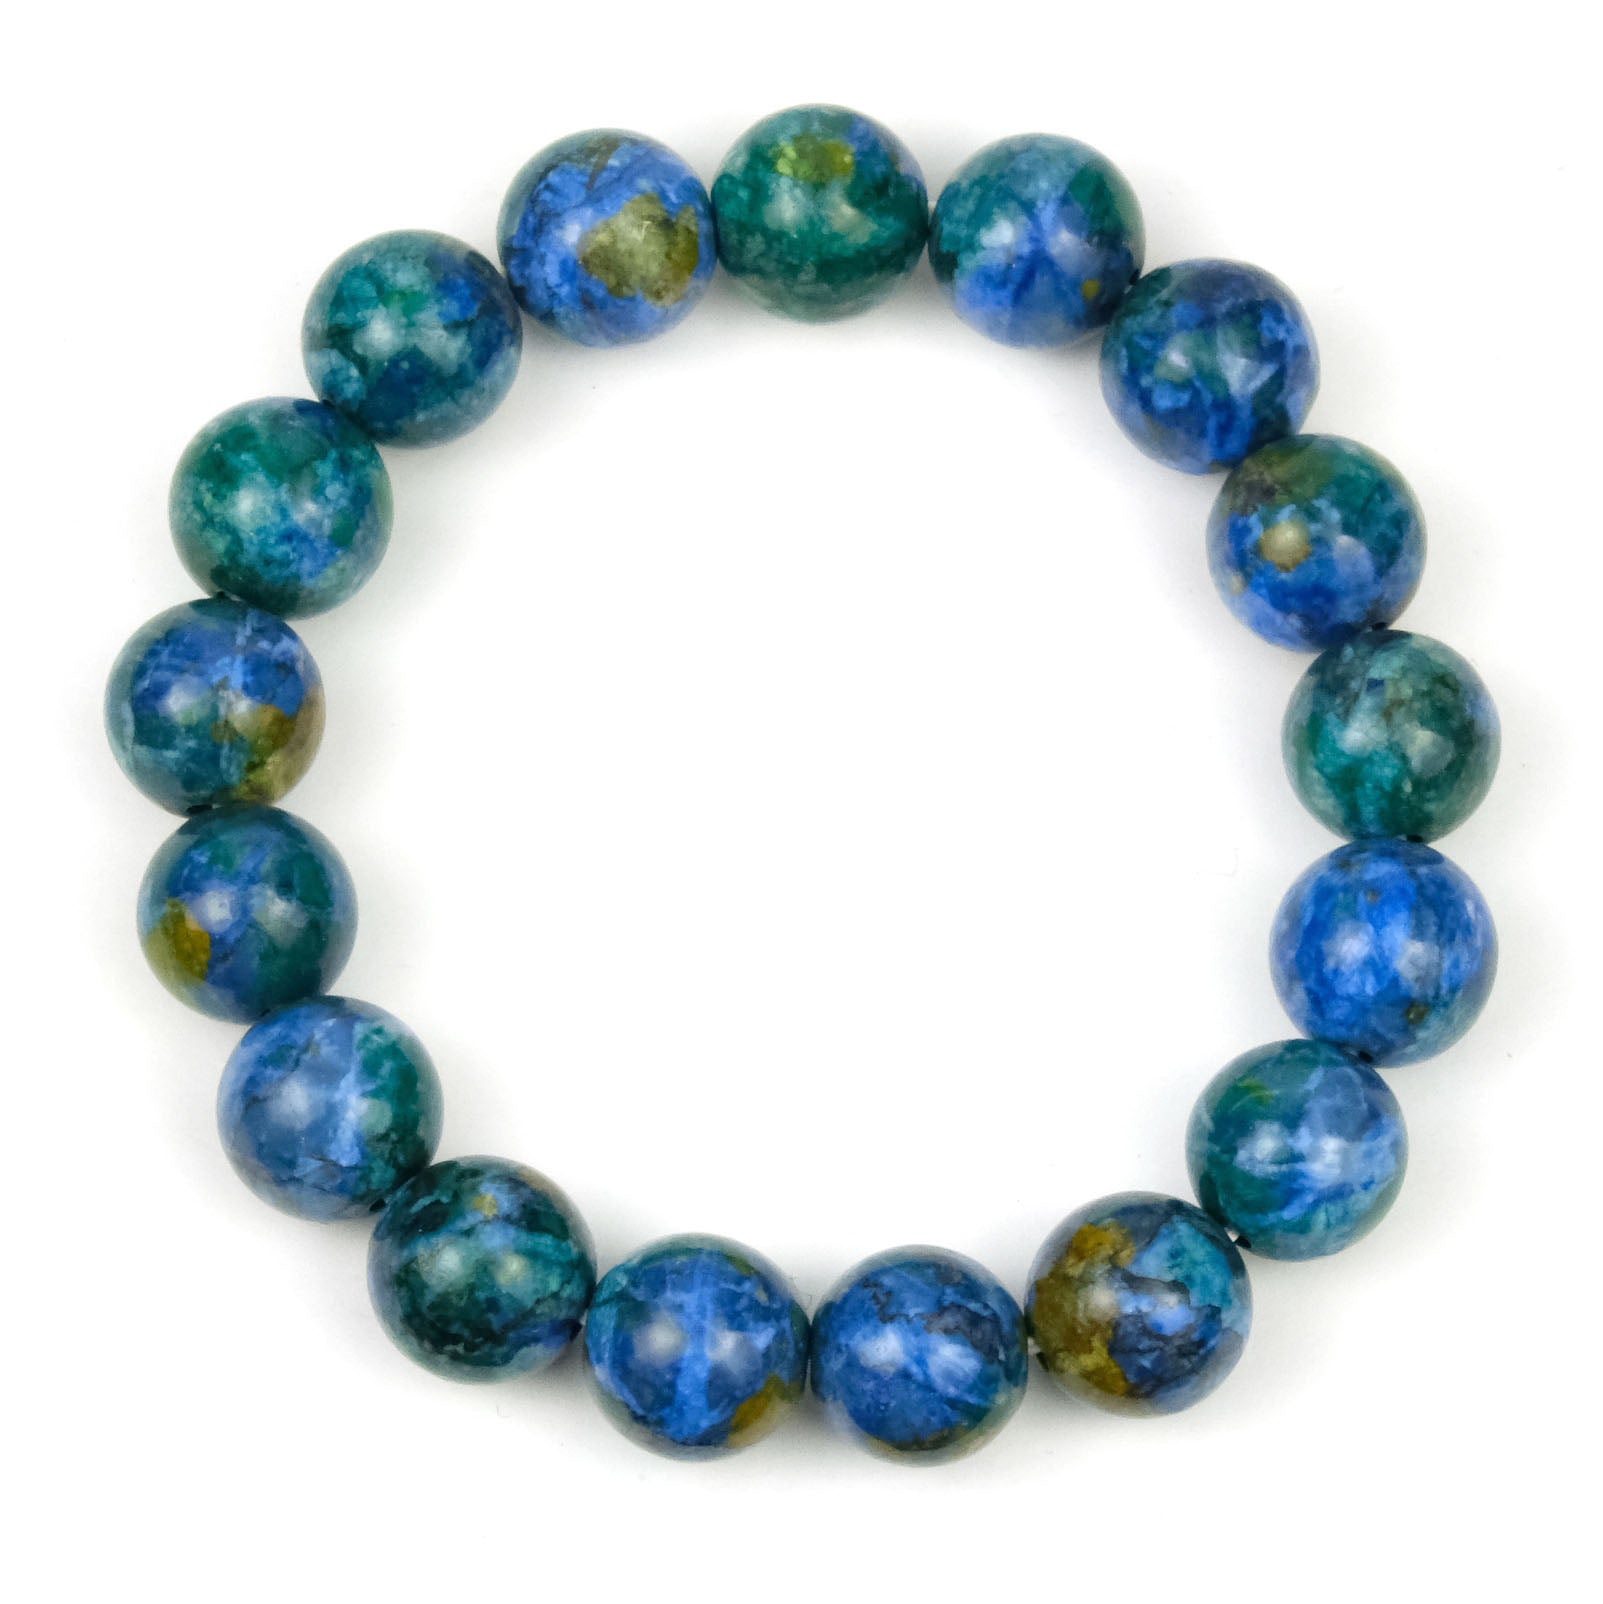 Natural Azurite Malachite 10mm Smooth Round Gemstone Beads Stretch Bracelet  - 21255